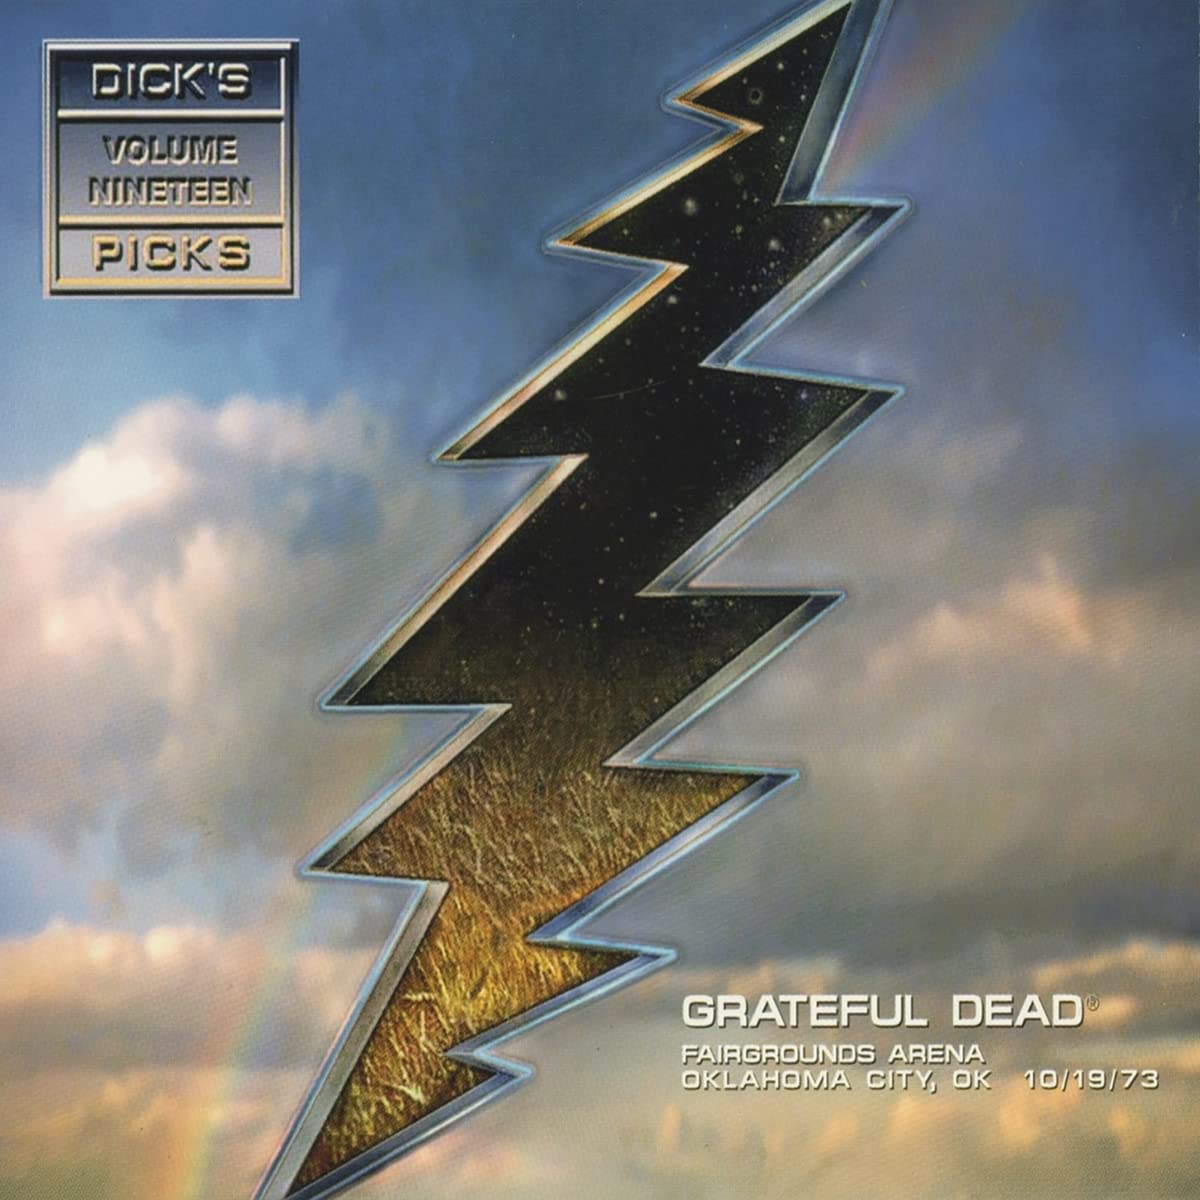 The Grateful Dead - "Dicks Picks Vol. 19 10/ 19/ 73 Oklahoma City Fairgrounds Arena Oklahoma City, OK"